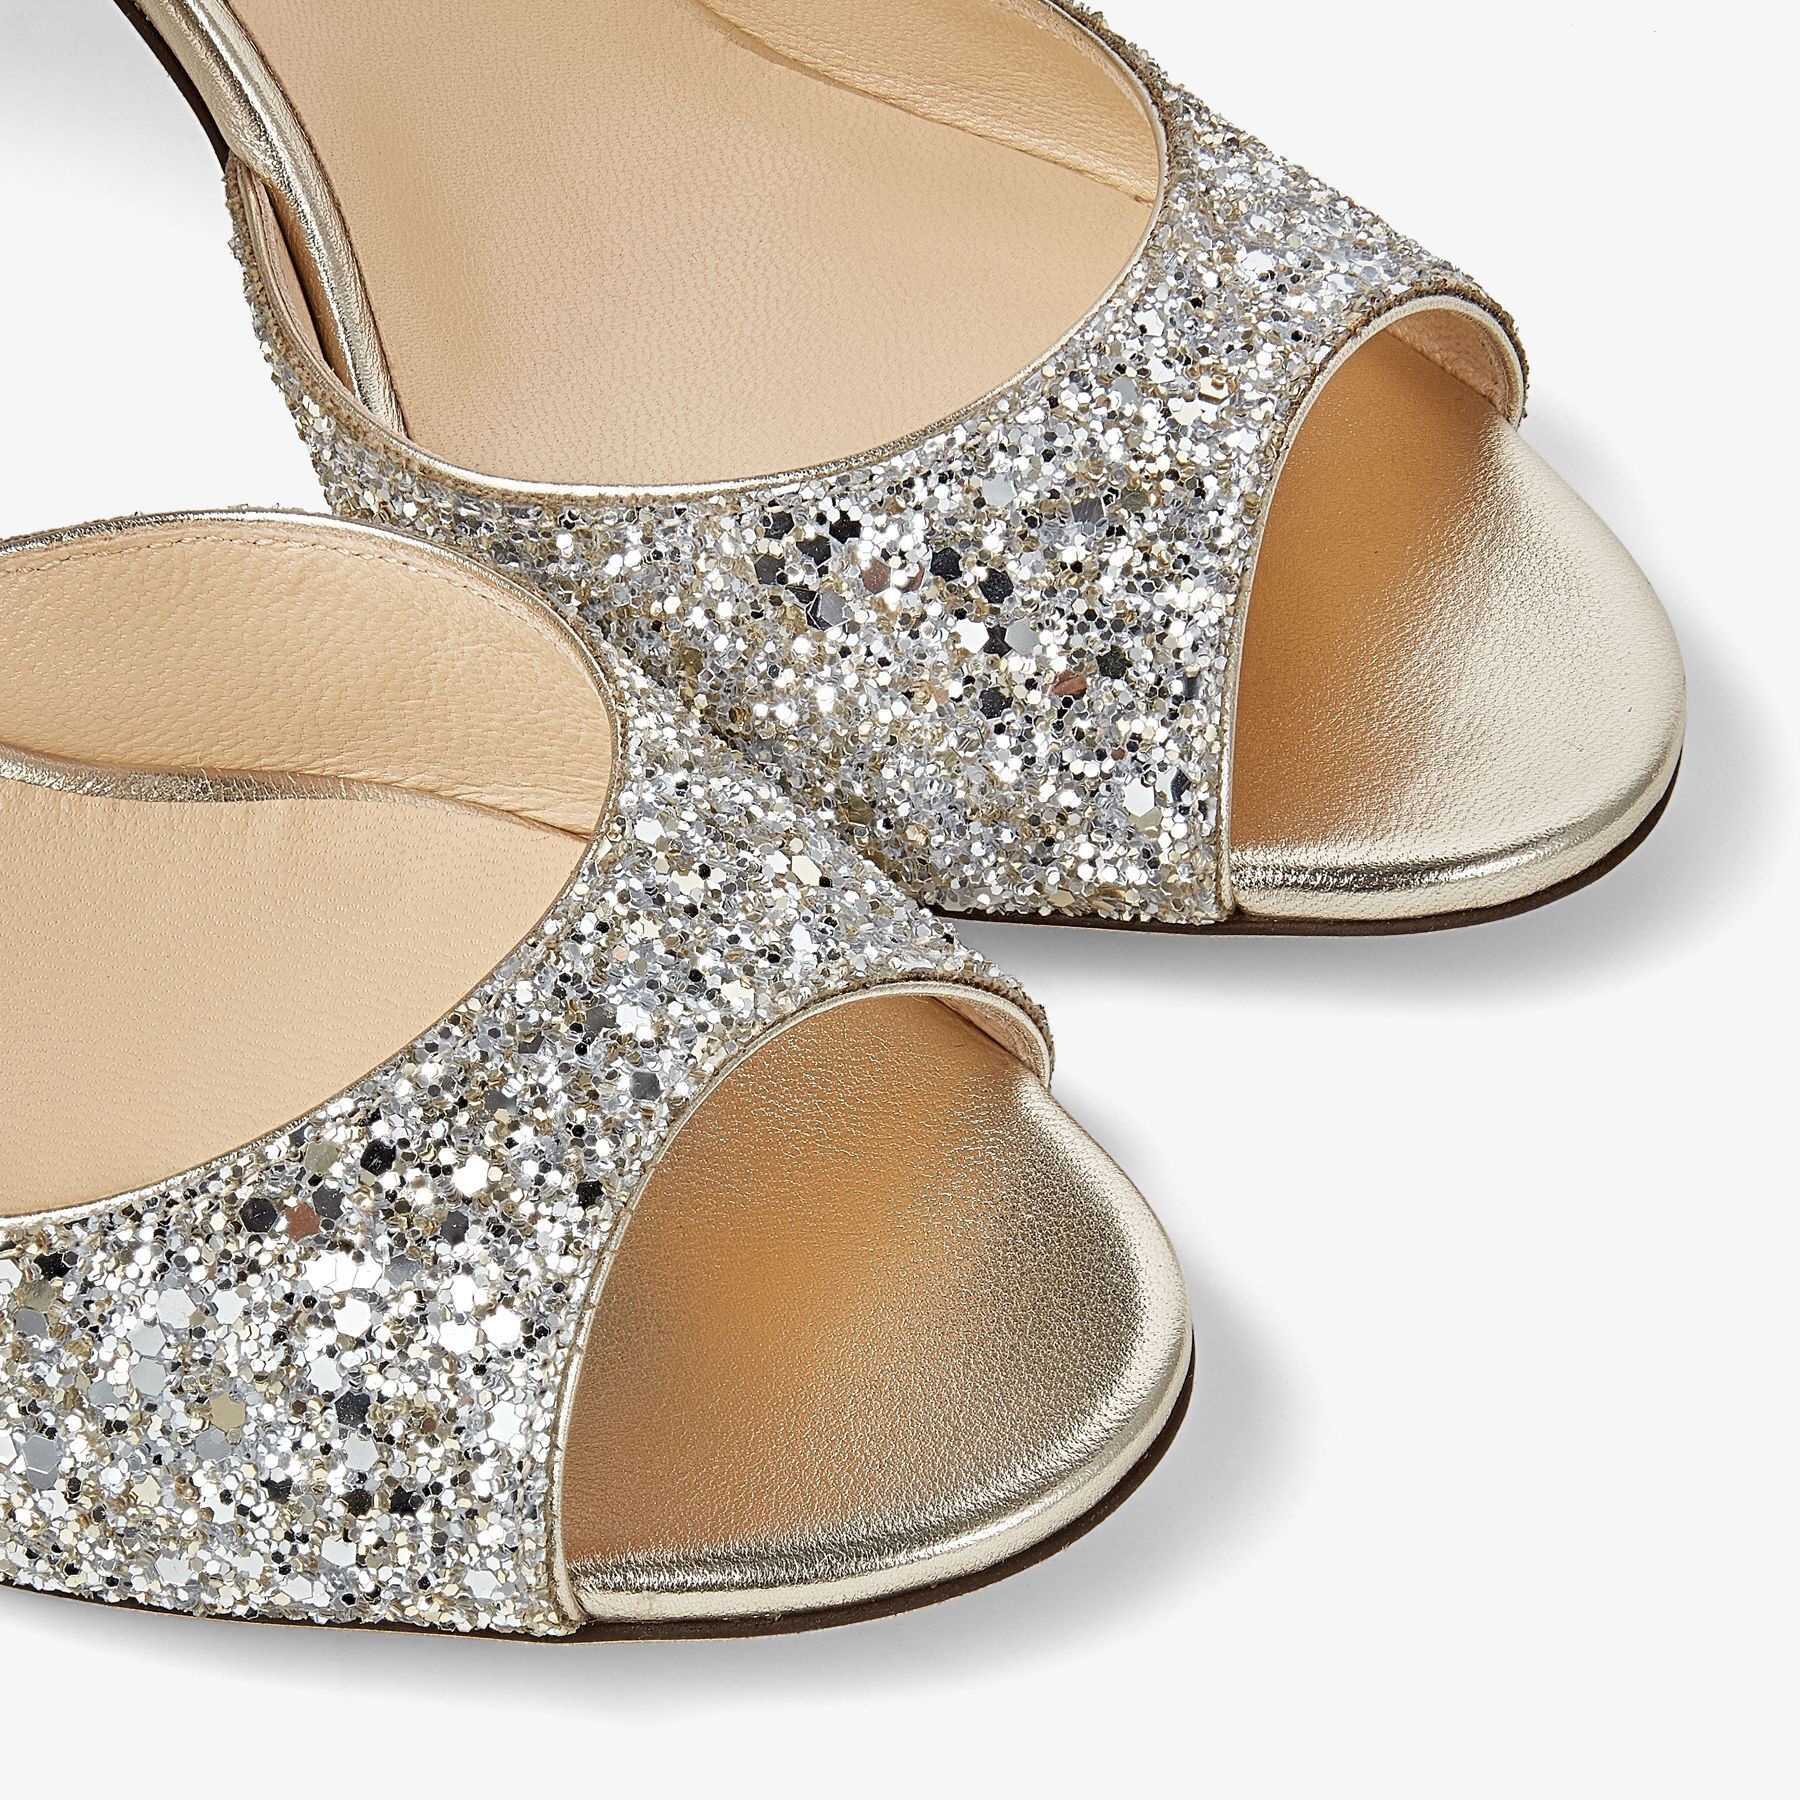 Emsy 85
Champagne Coarse Glitter Fabric Sandals with Crossover Straps - 4